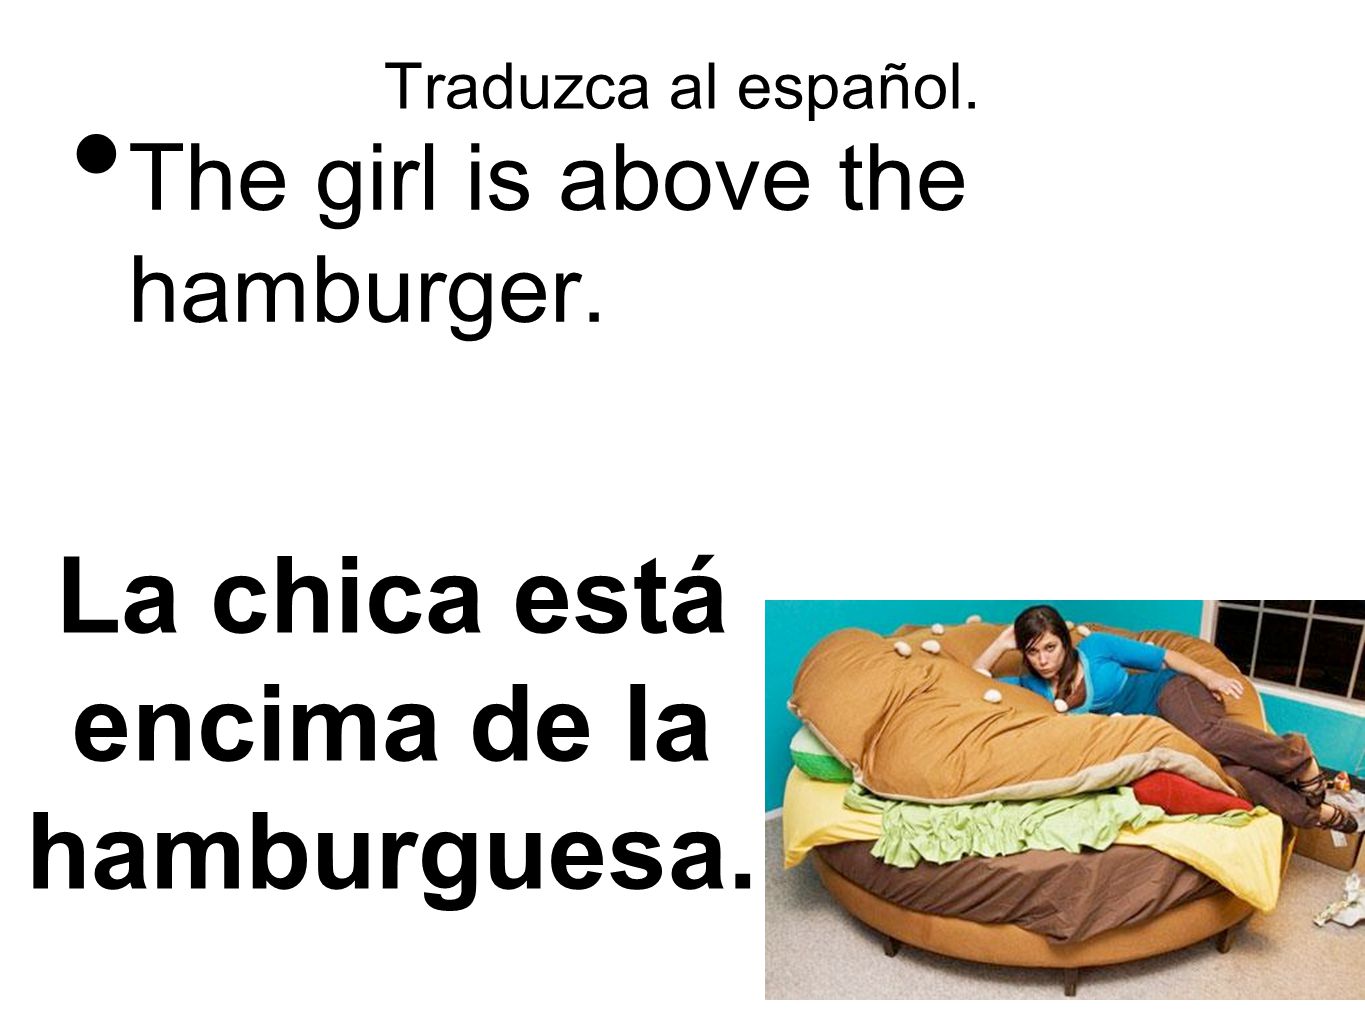 La chica está encima de la hamburguesa.